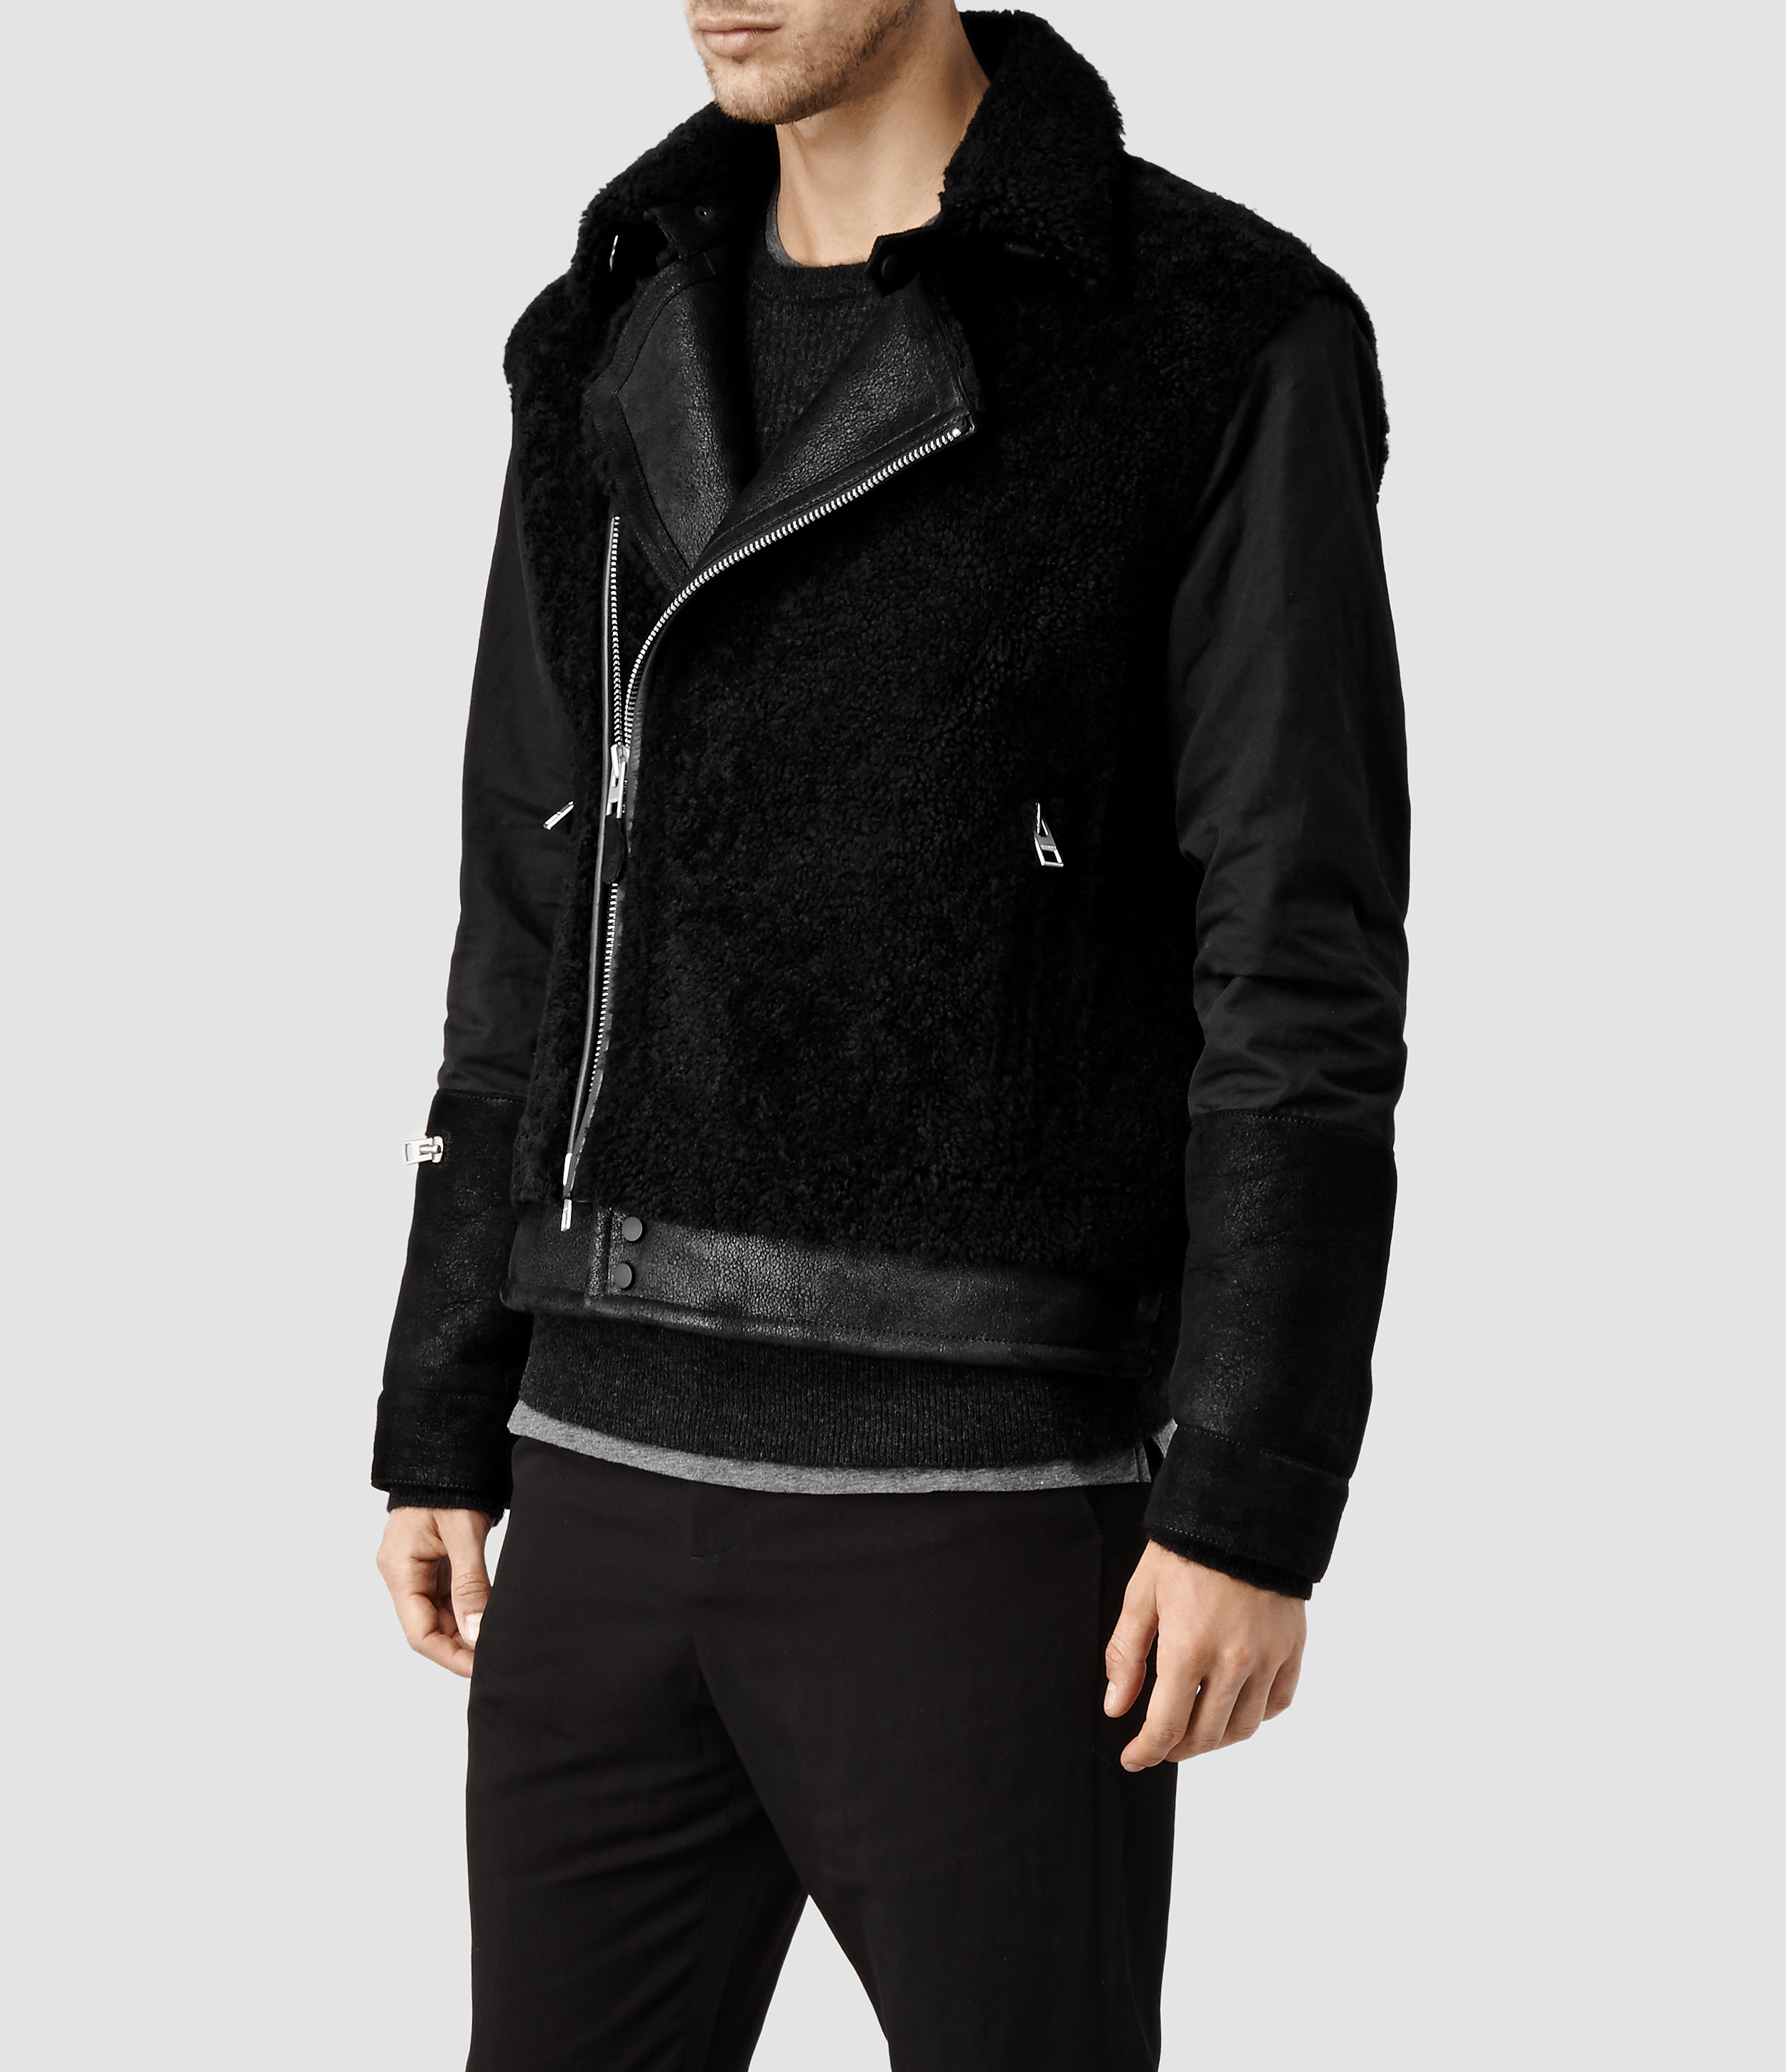 Lyst - Allsaints Talbot Shearling Leather Coat in Black for Men